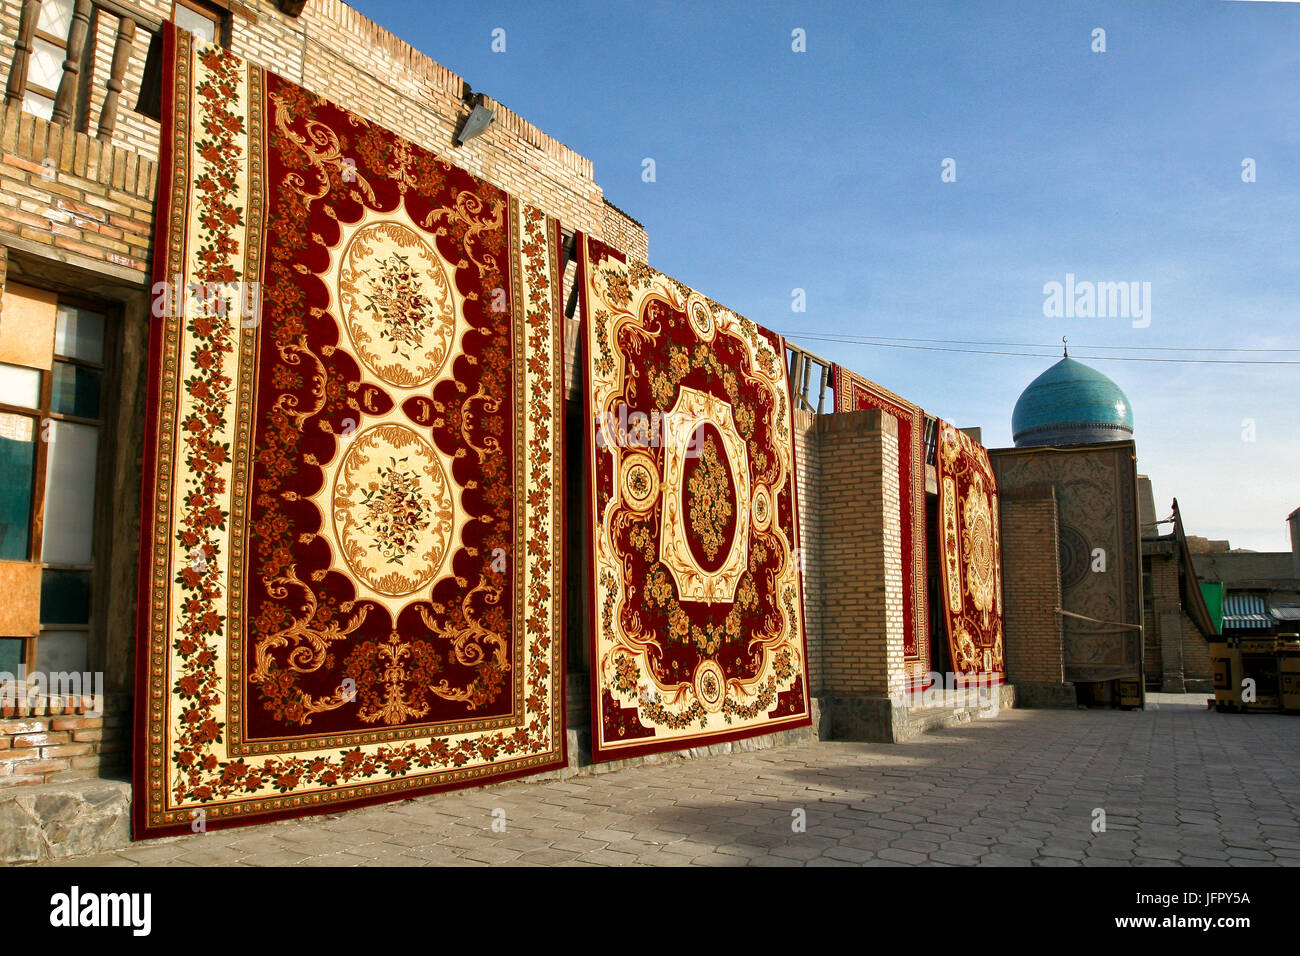 Sale of carpets on the market in Bukhara, Uzbekistan Stock Photo